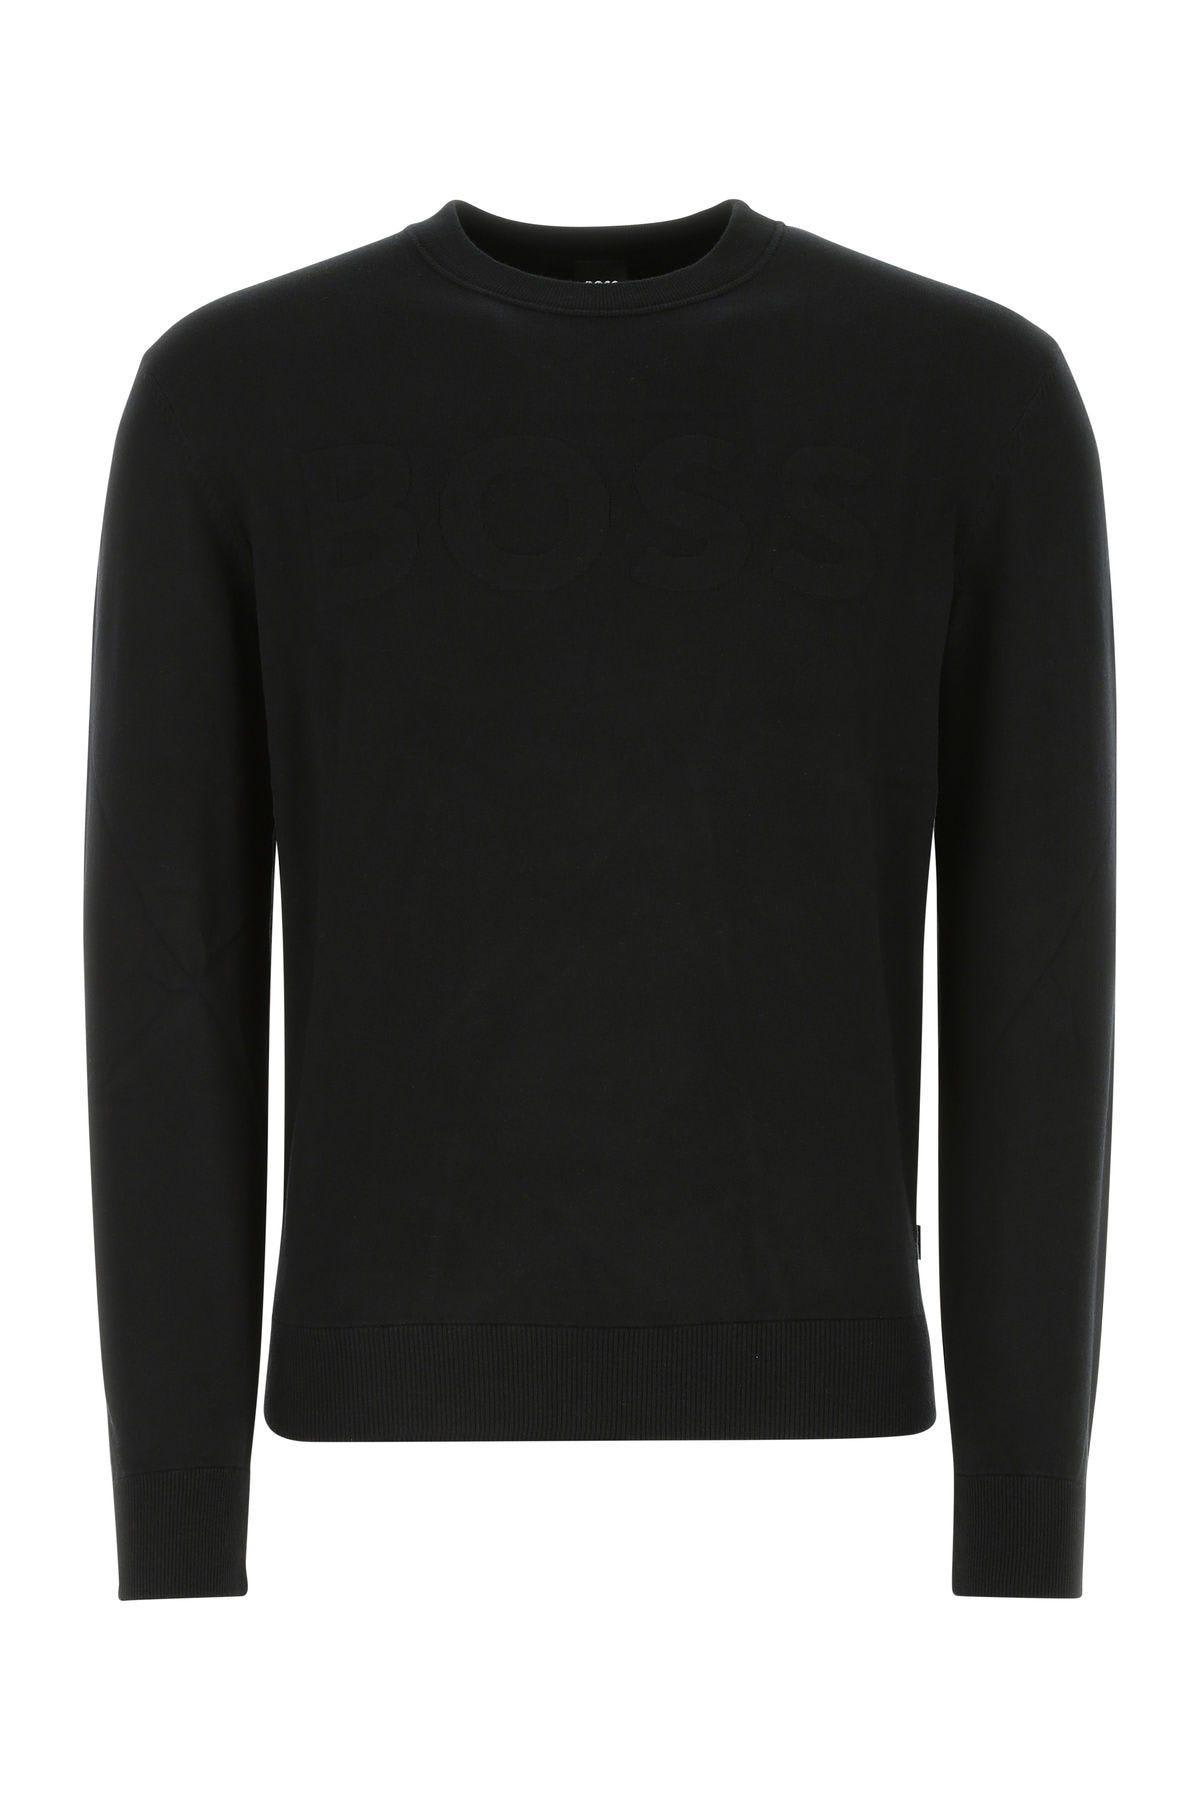 Hugo Boss Black Cotton Blend Sweater